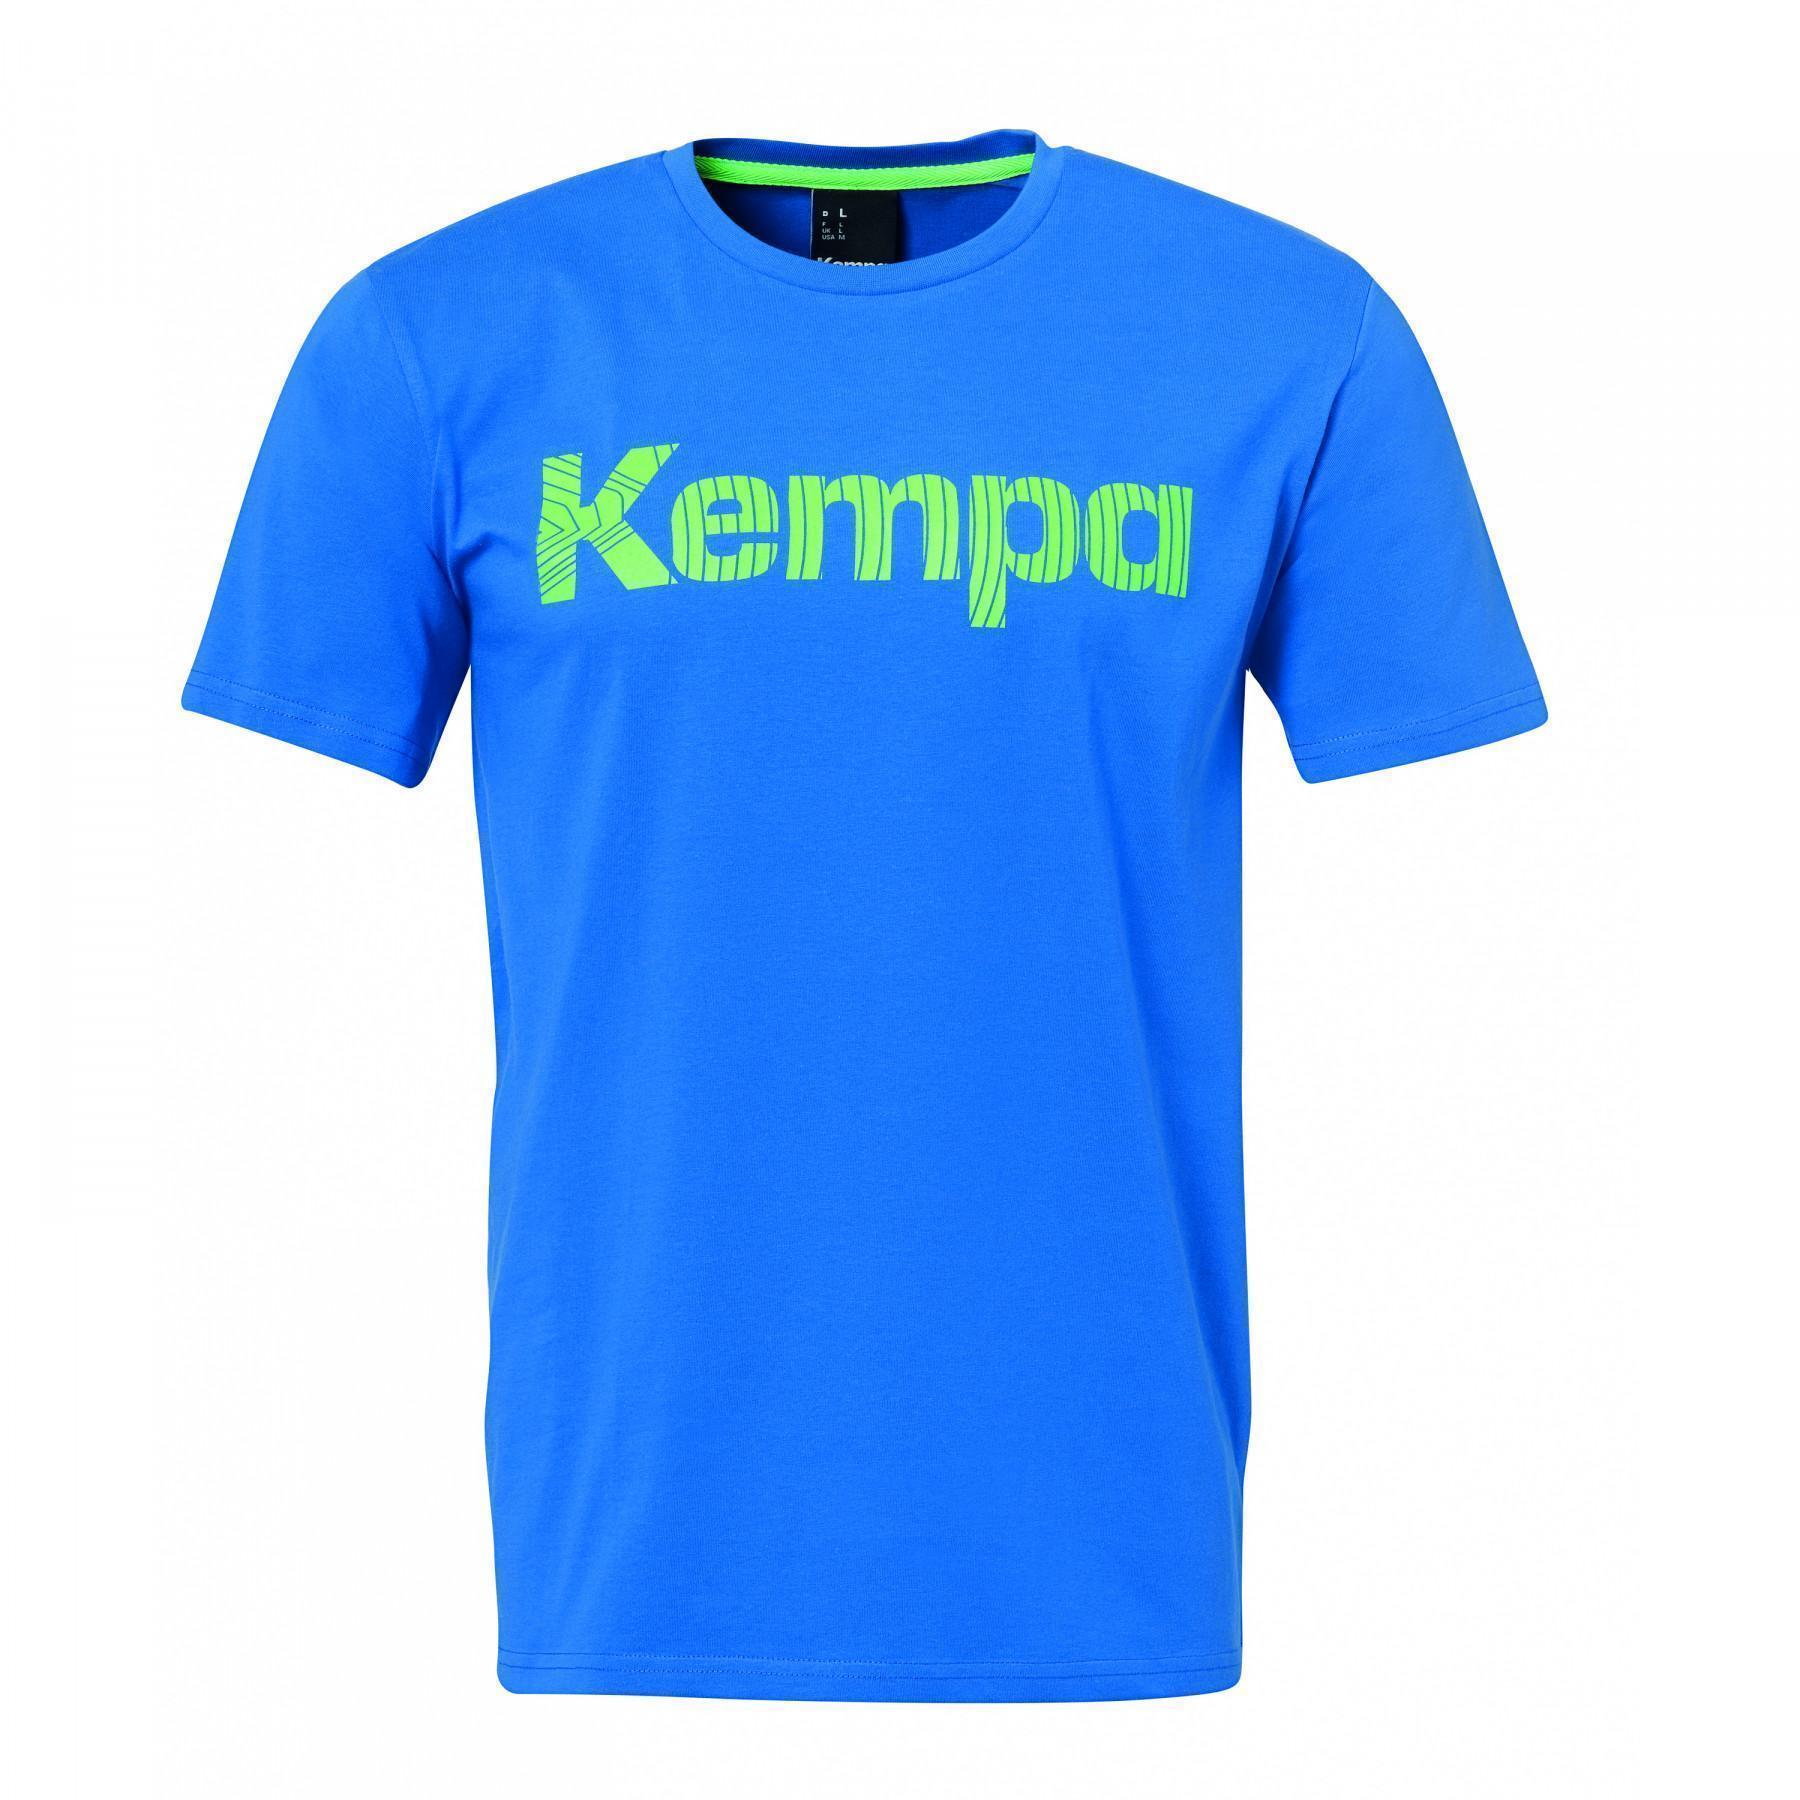 Grafik-T-Shirt Kempa